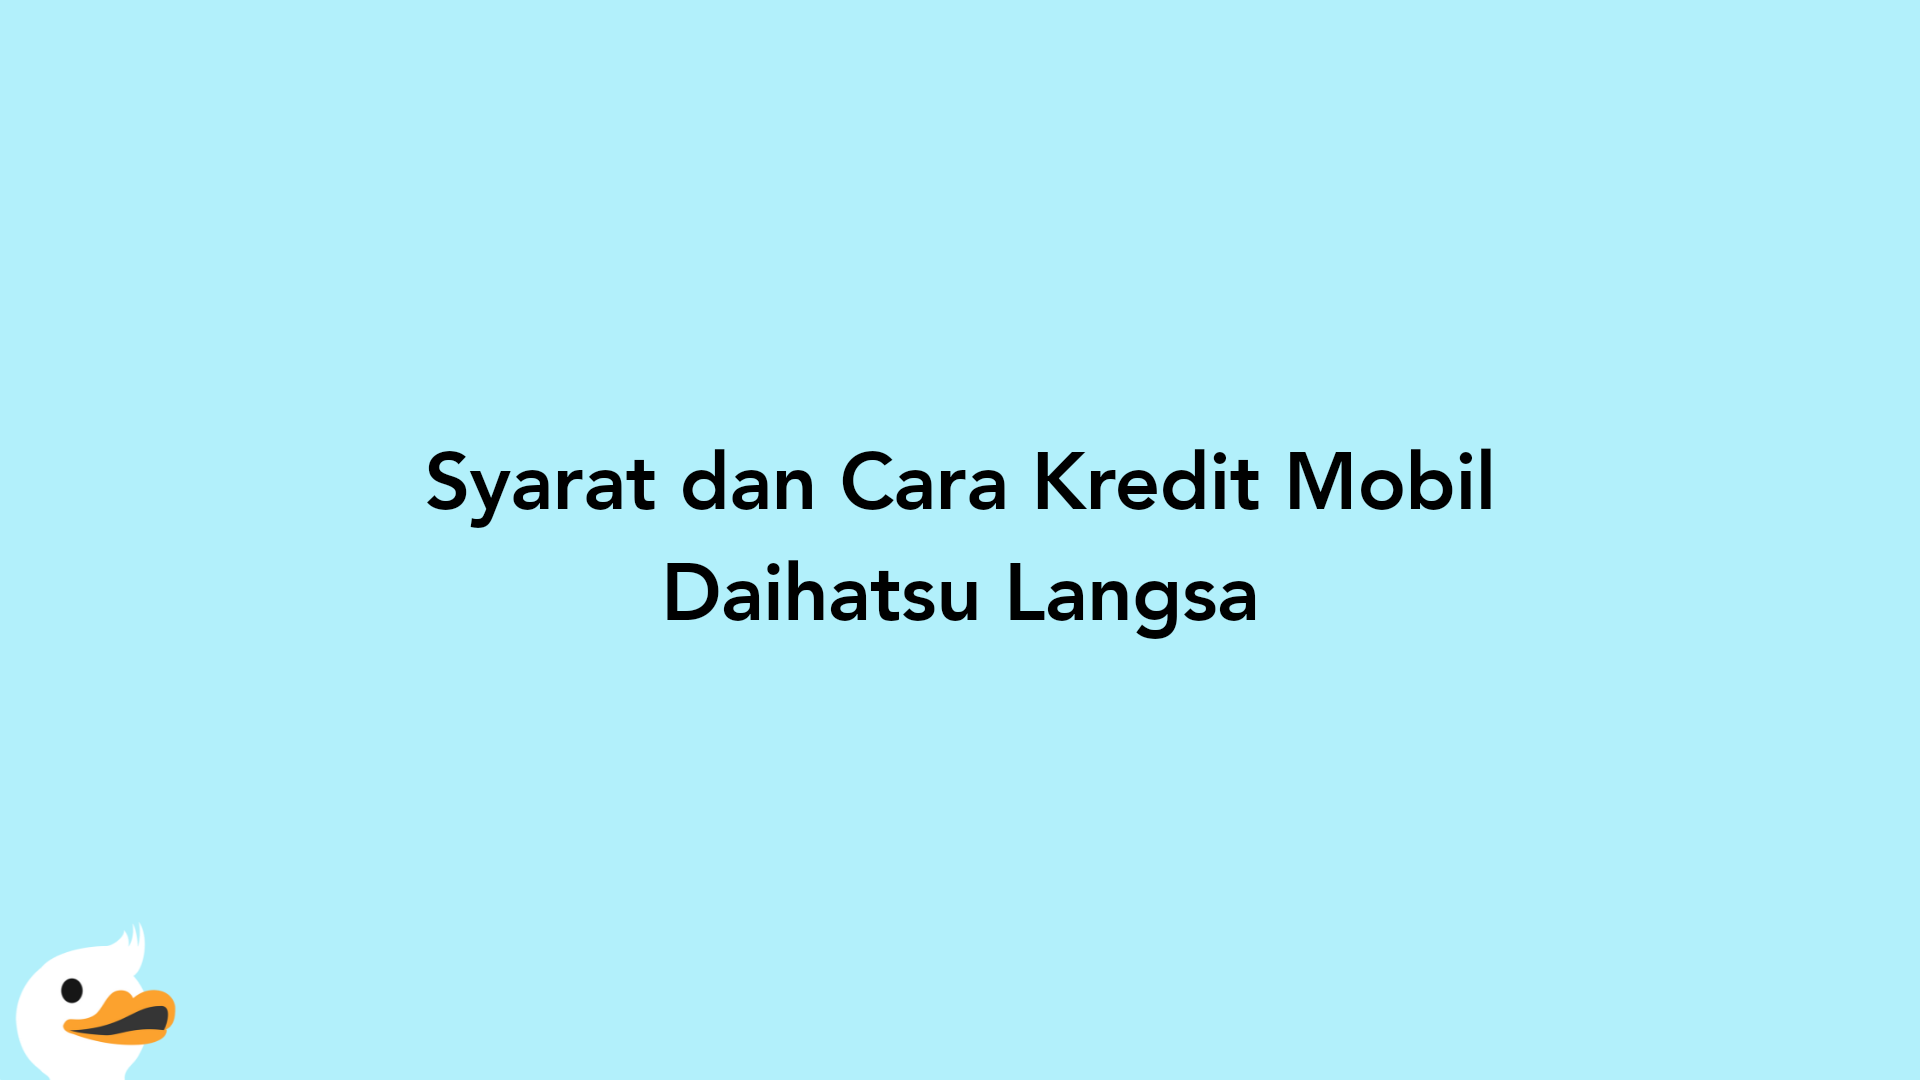 Syarat dan Cara Kredit Mobil Daihatsu Langsa